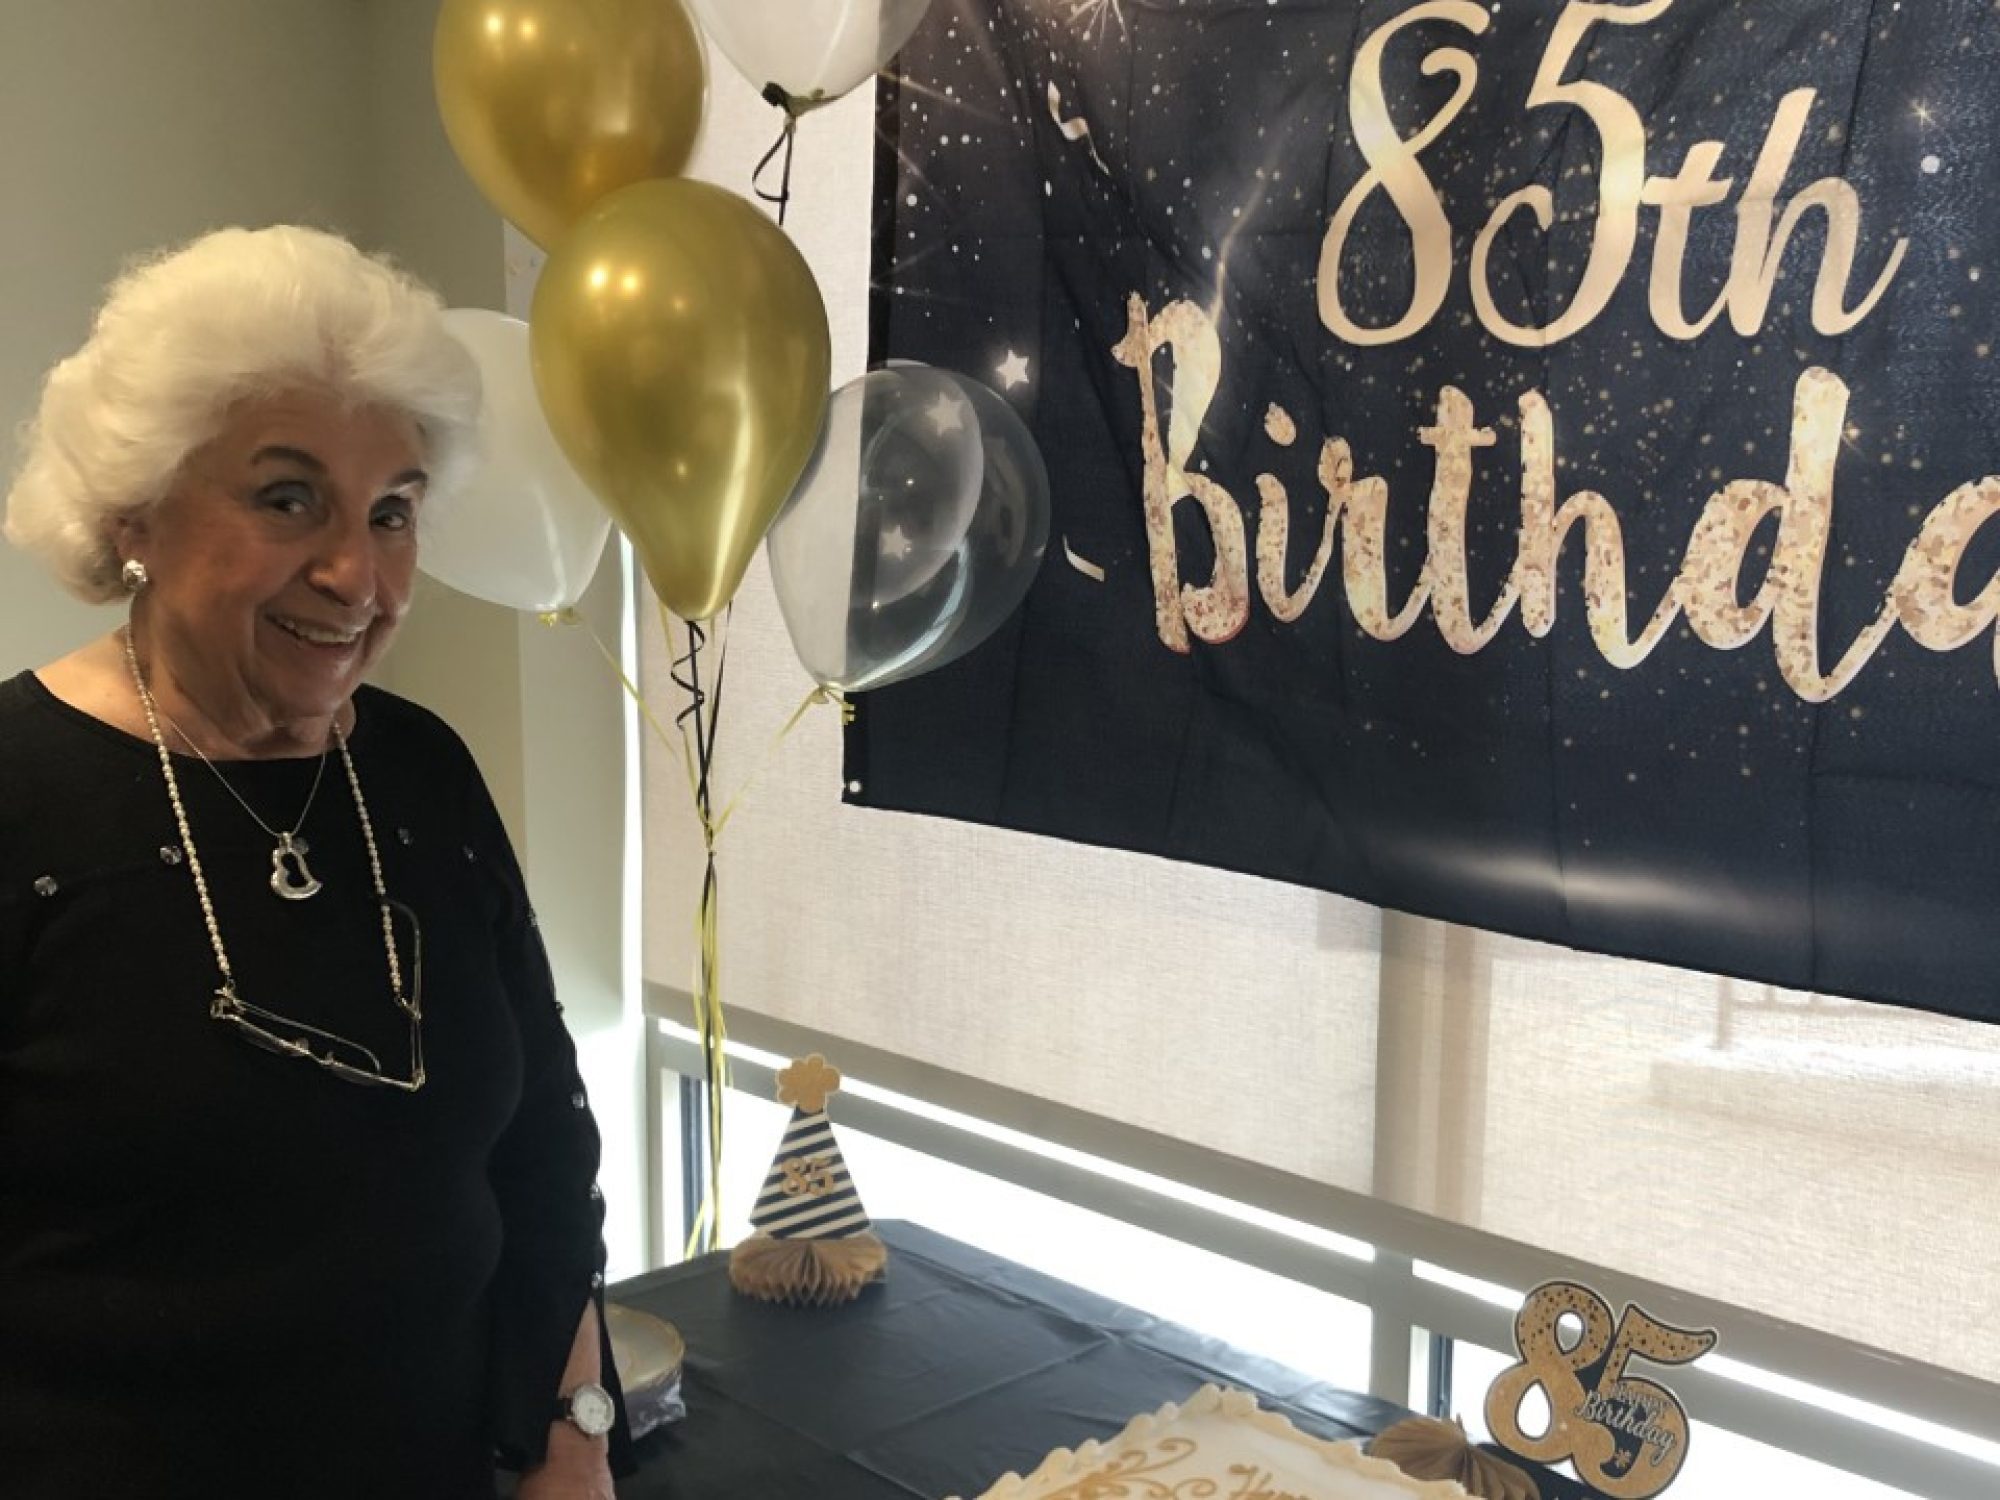 Gilda celebrates her 85th birthday